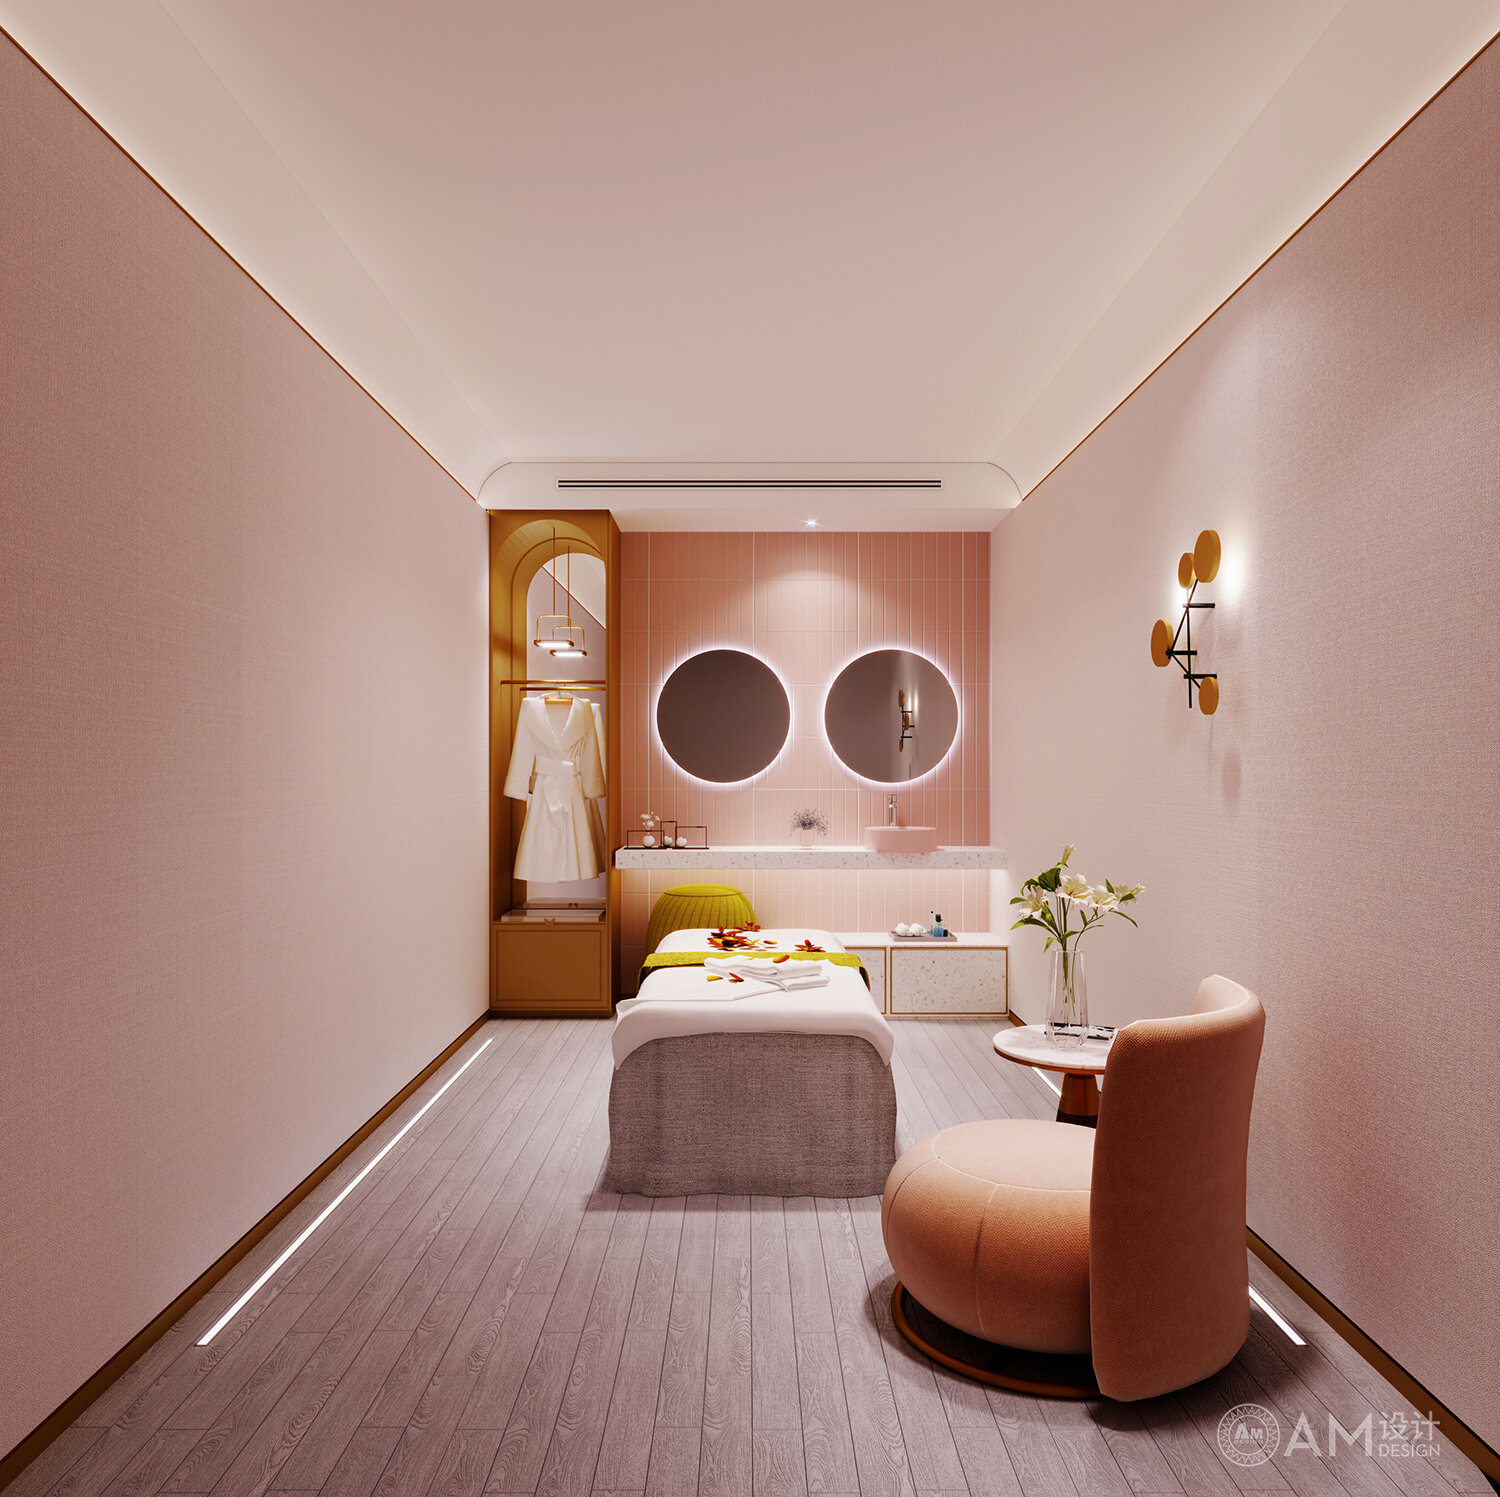 AM DESIGN | Corridor Design of Beijing Antisen Beauty Salon